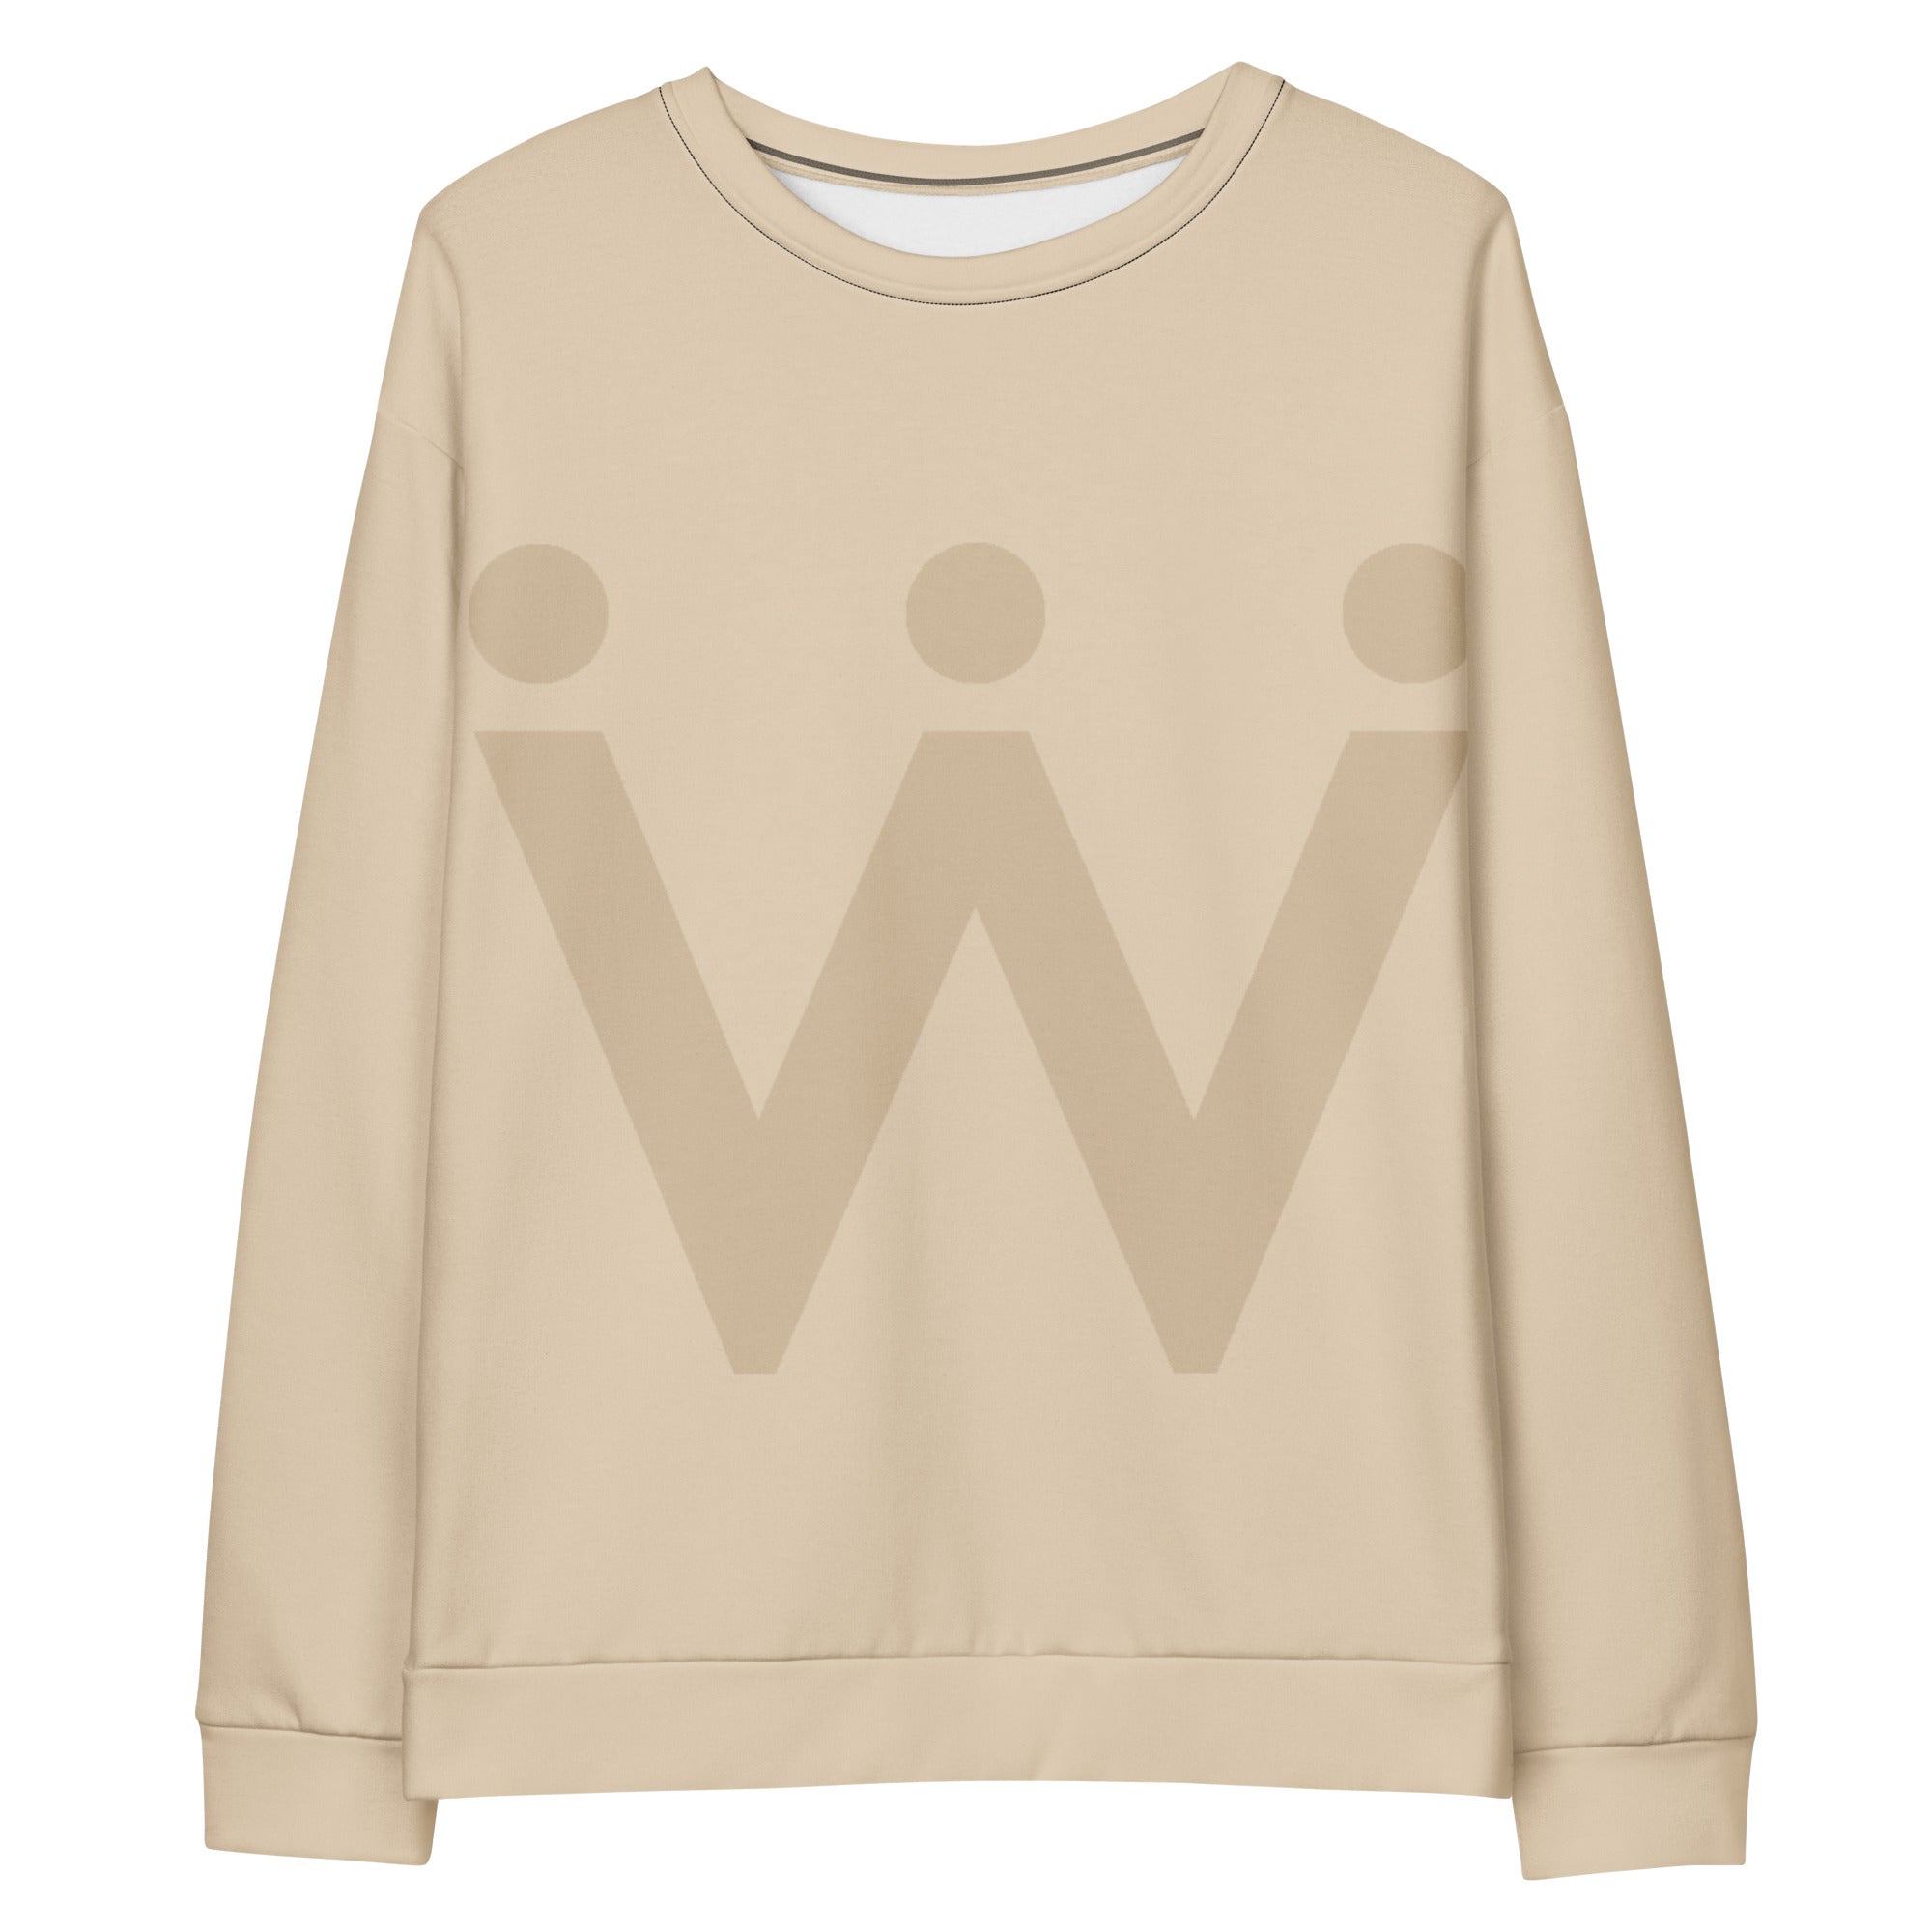 Crown Sweater (Sand)